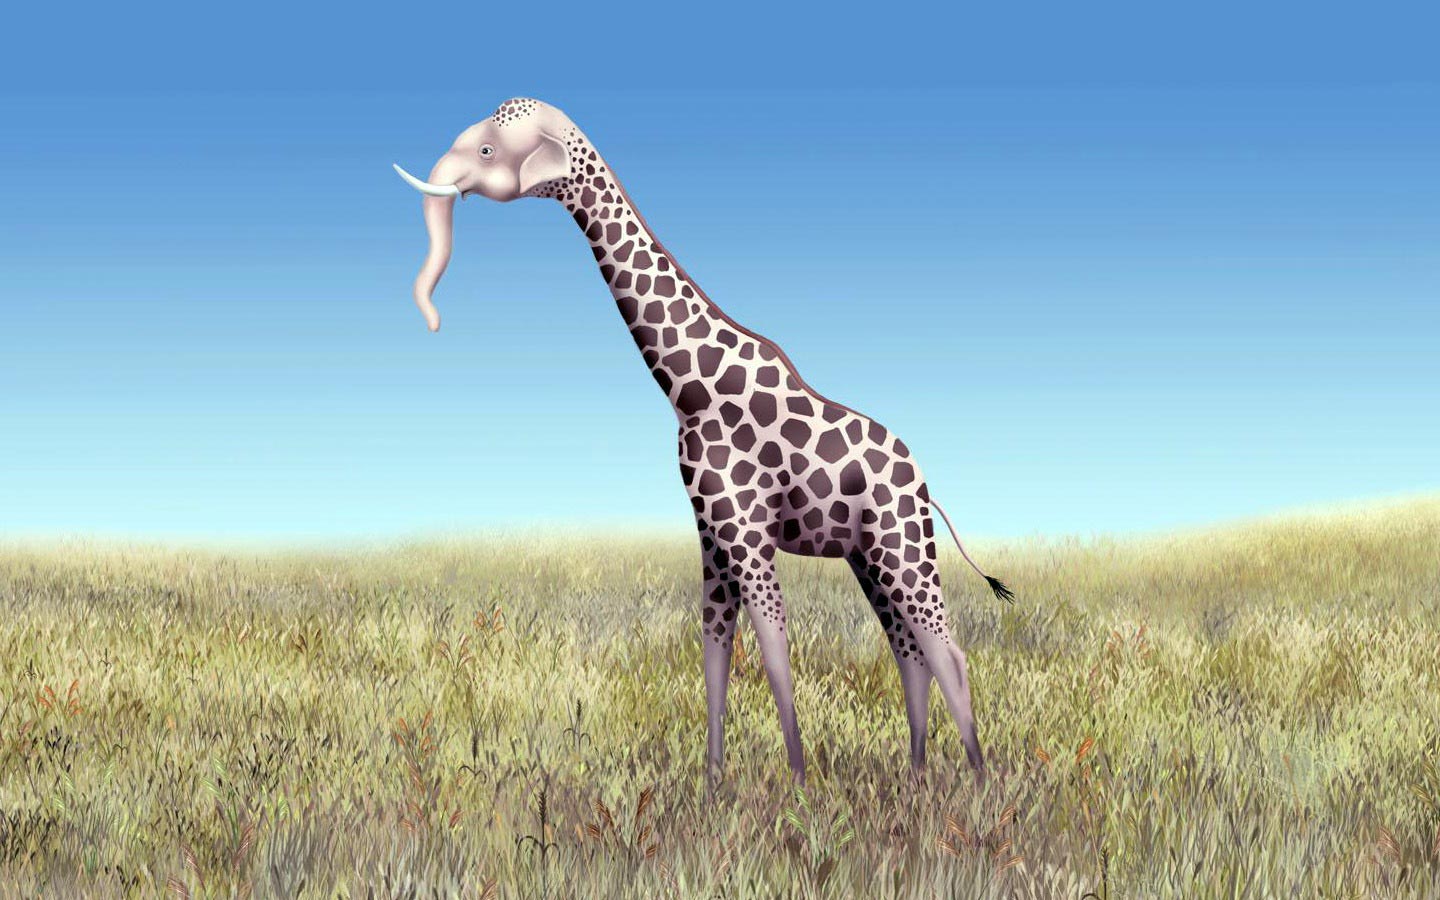 член у жирафа длина фото 62